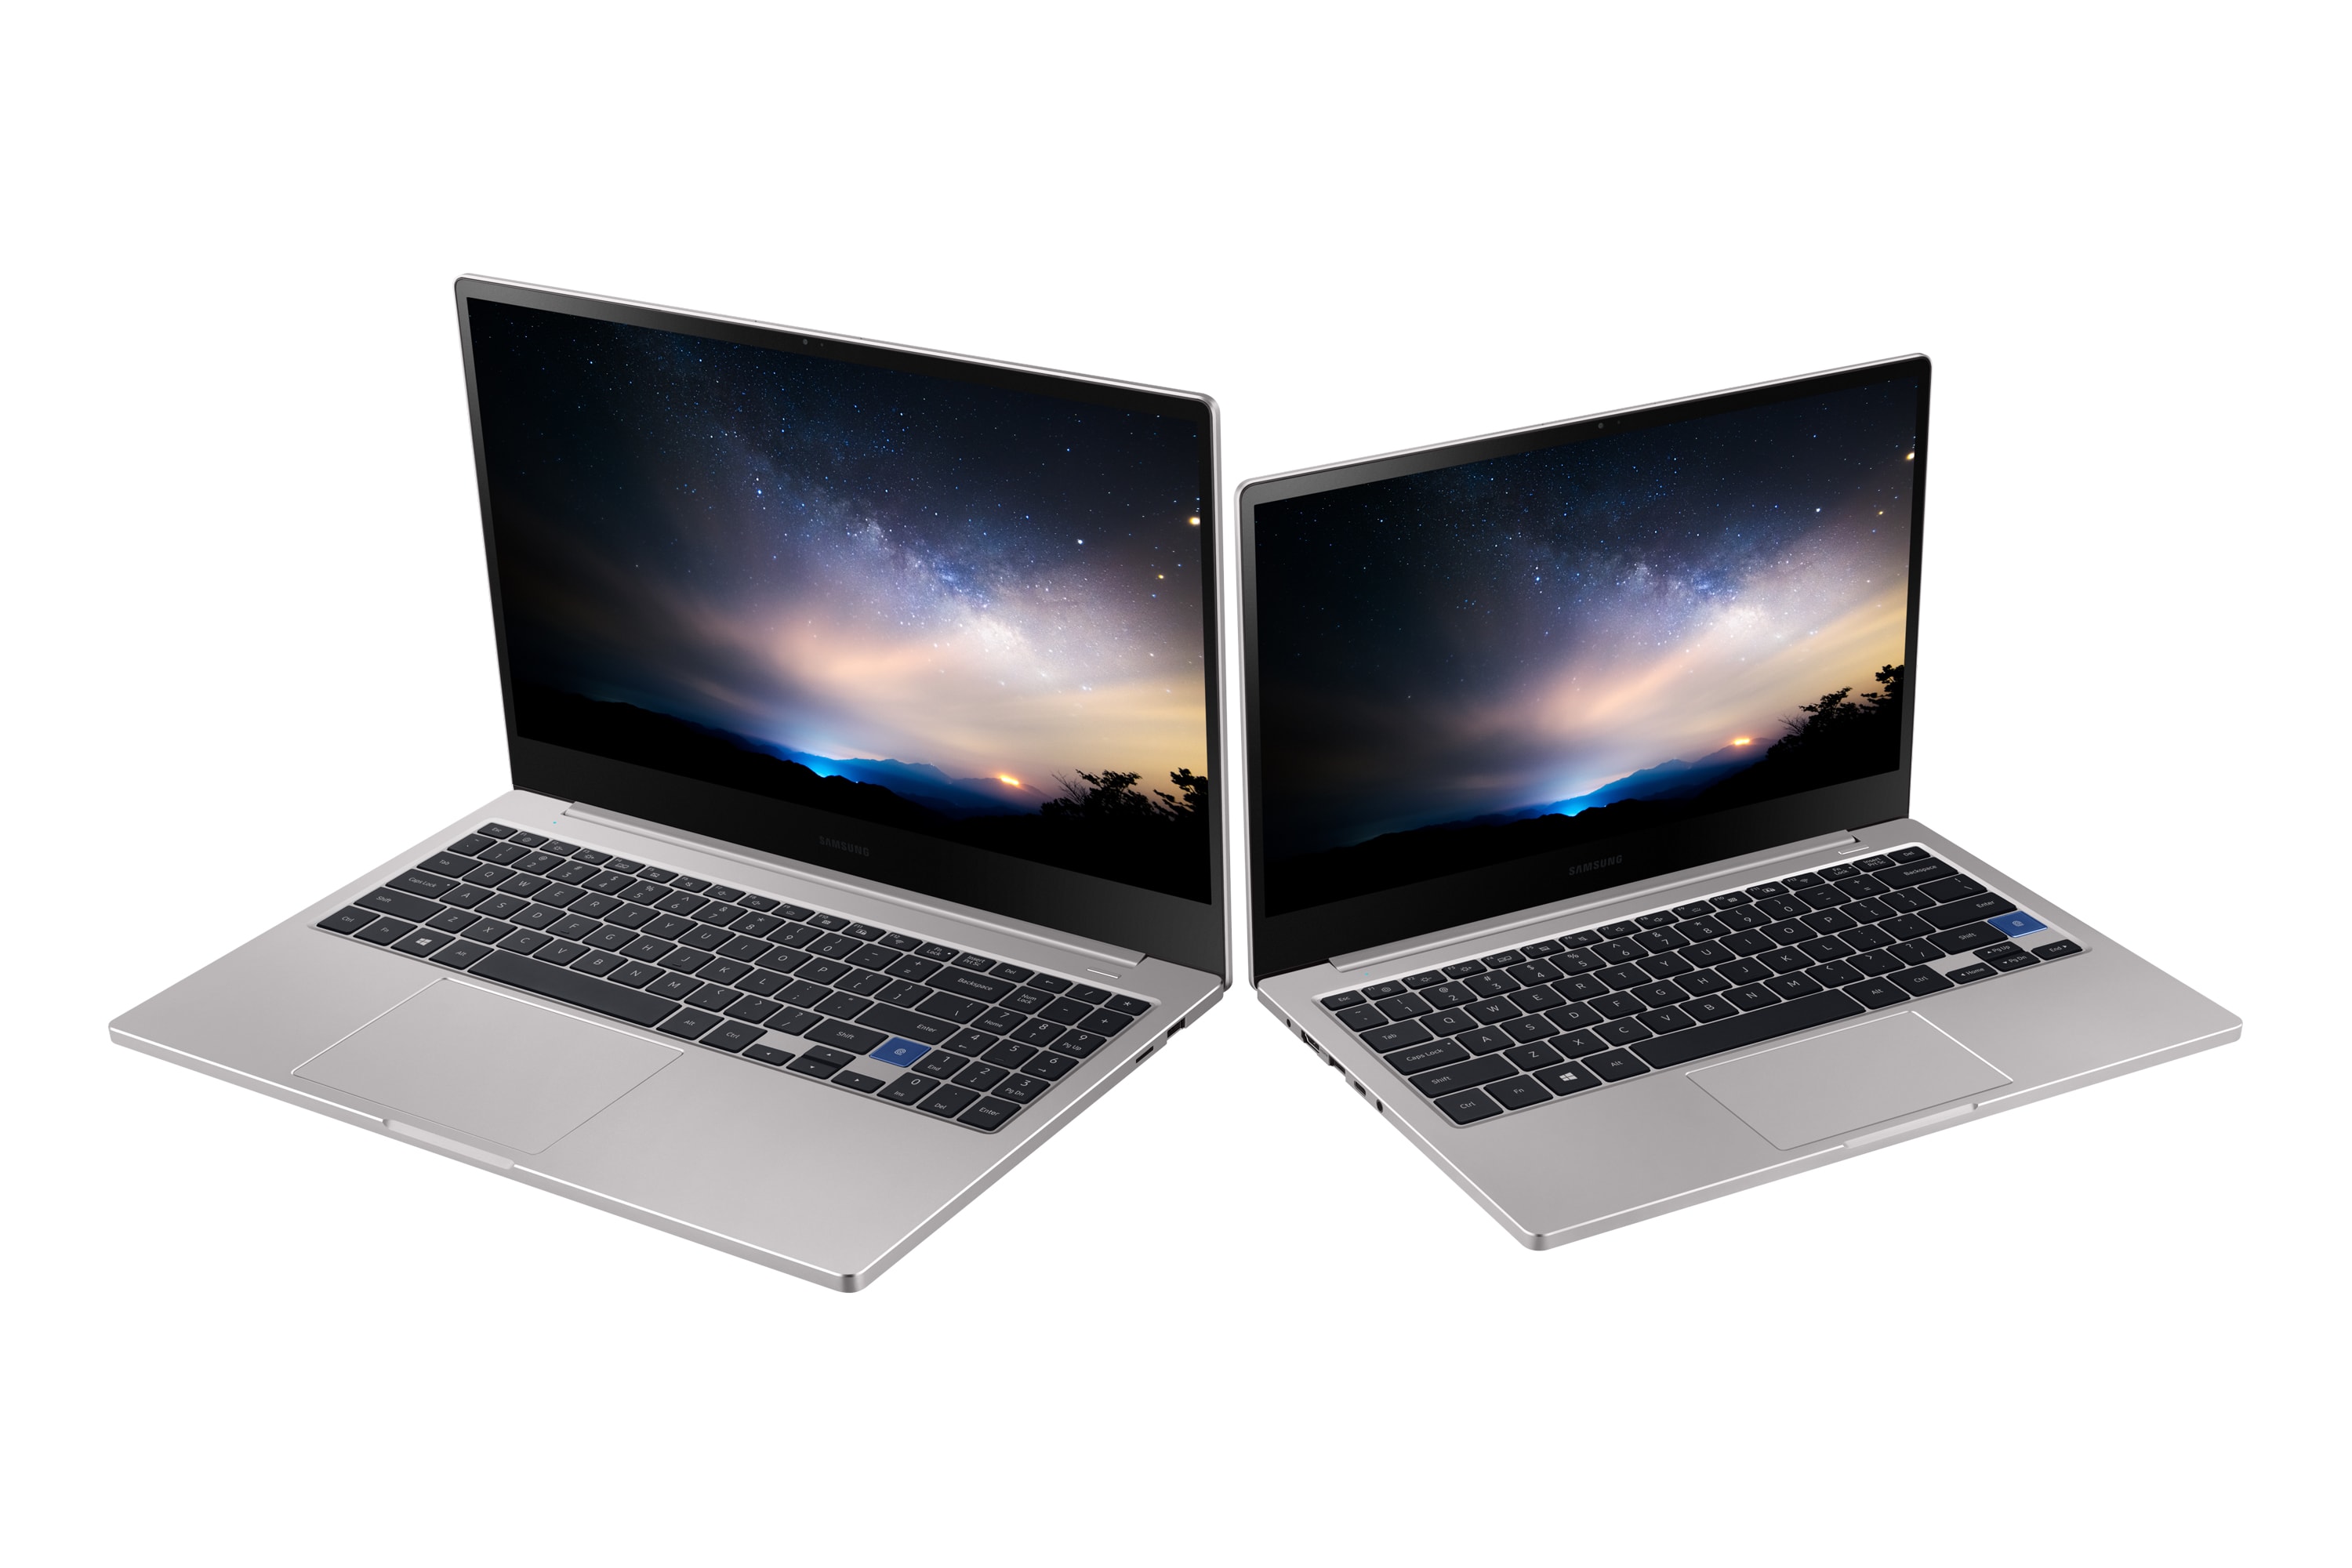 Samsung Notebook 7, cópia dos MacBooks Pro